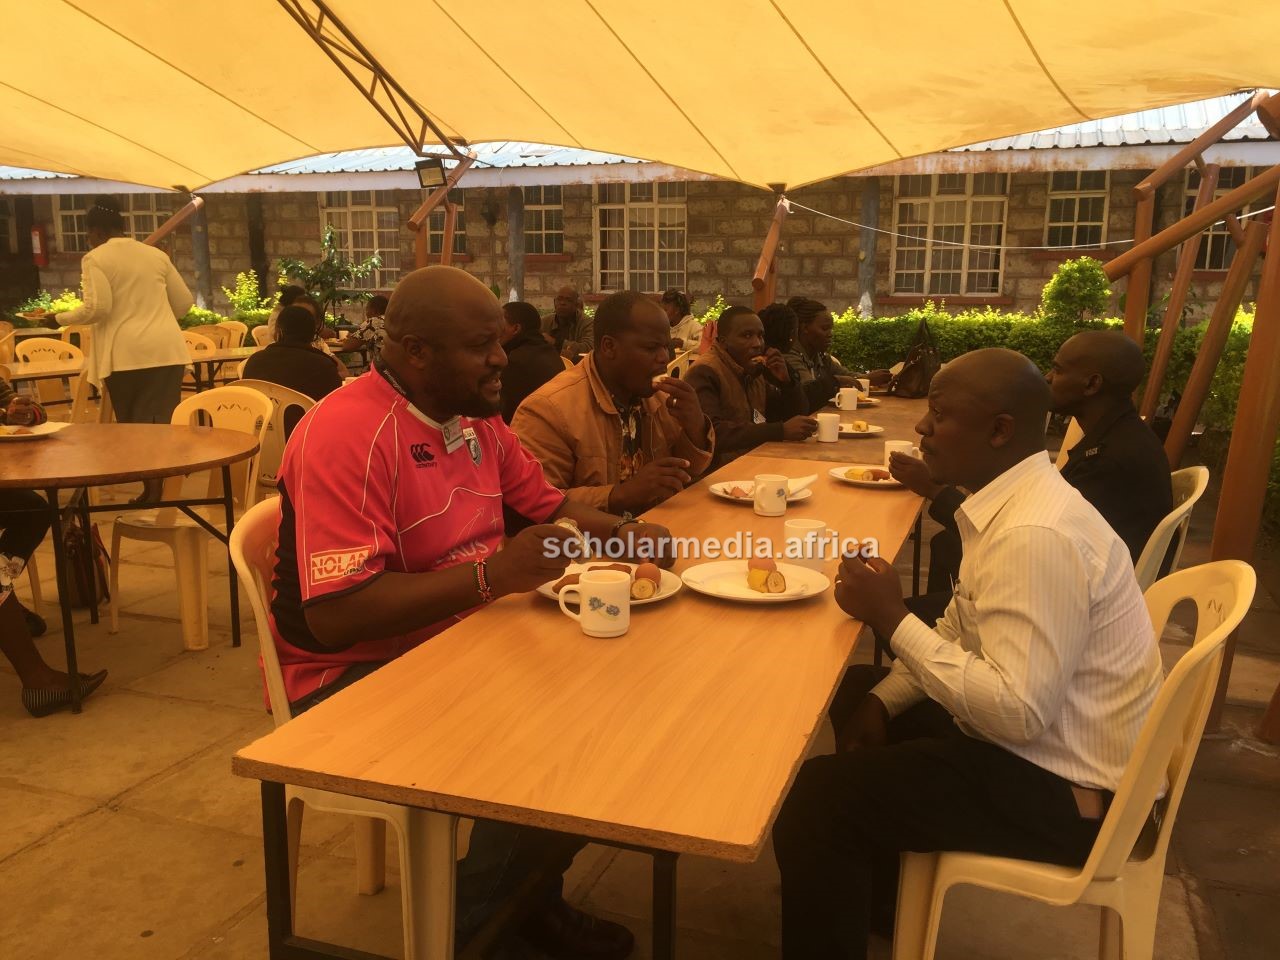 Participants having breakfast during the event. PHOTO/Wangari Njoroge, Scholar Media Africa.